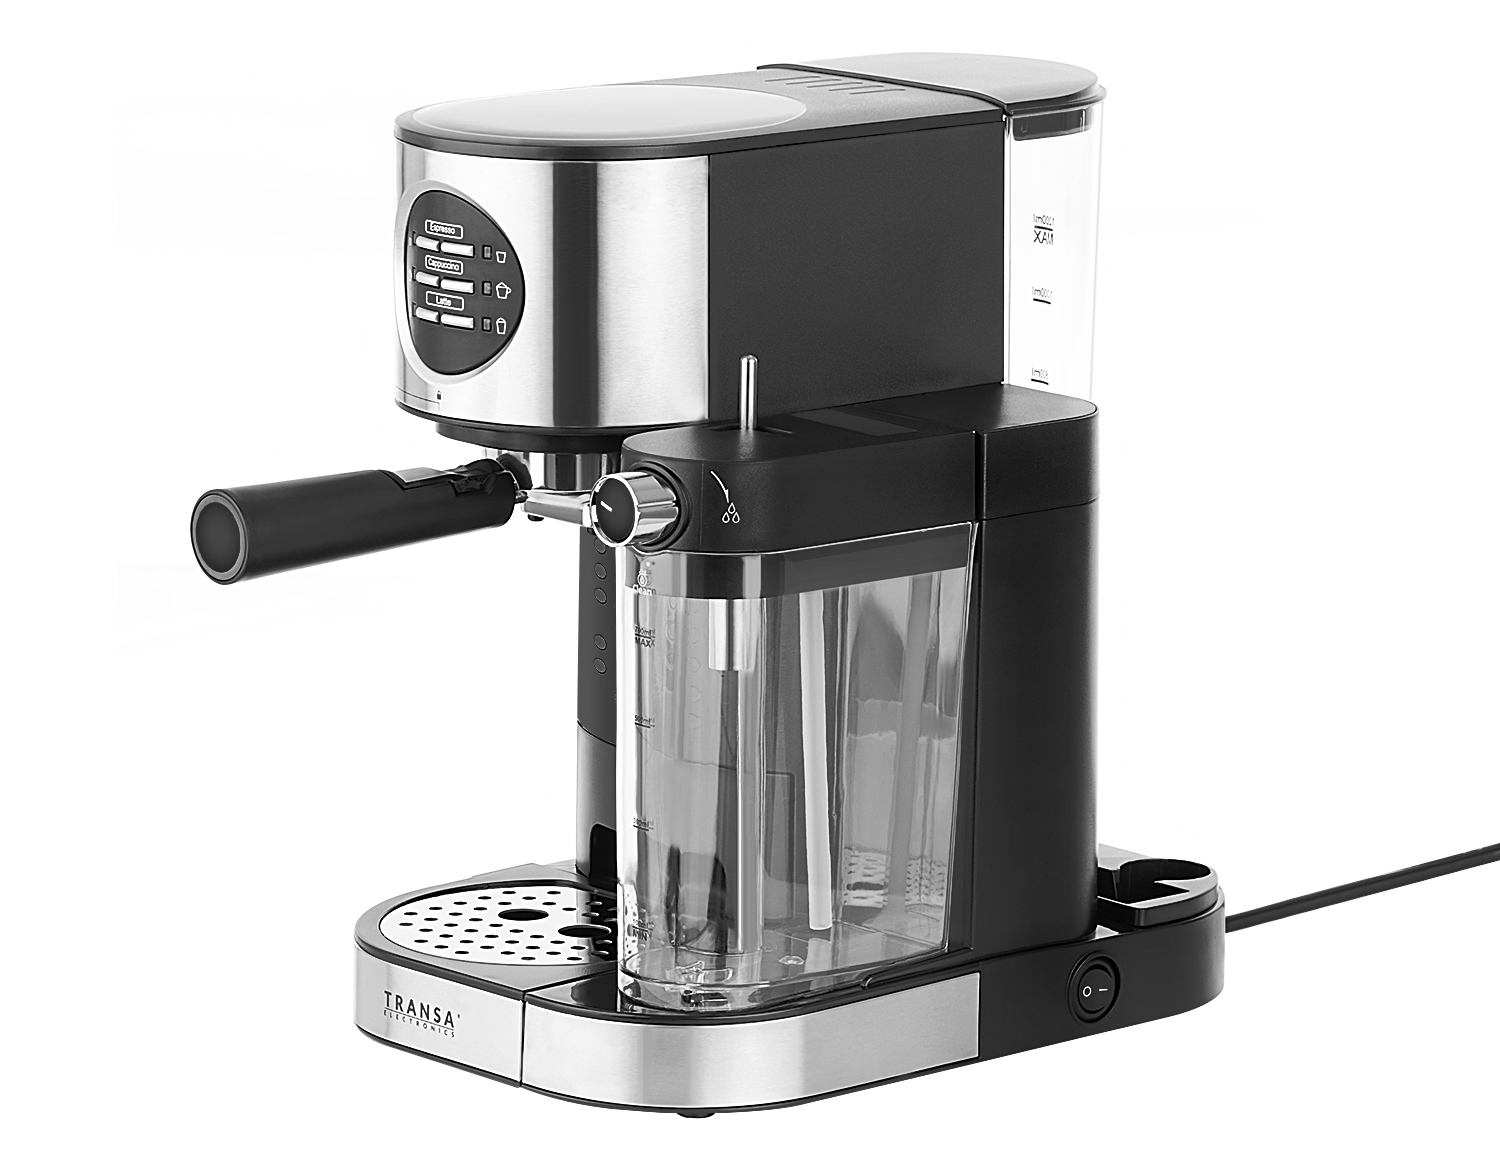 PRESSURE kavos virimo aparatas 1470W 15bar Frother Maltos kavos rūšys